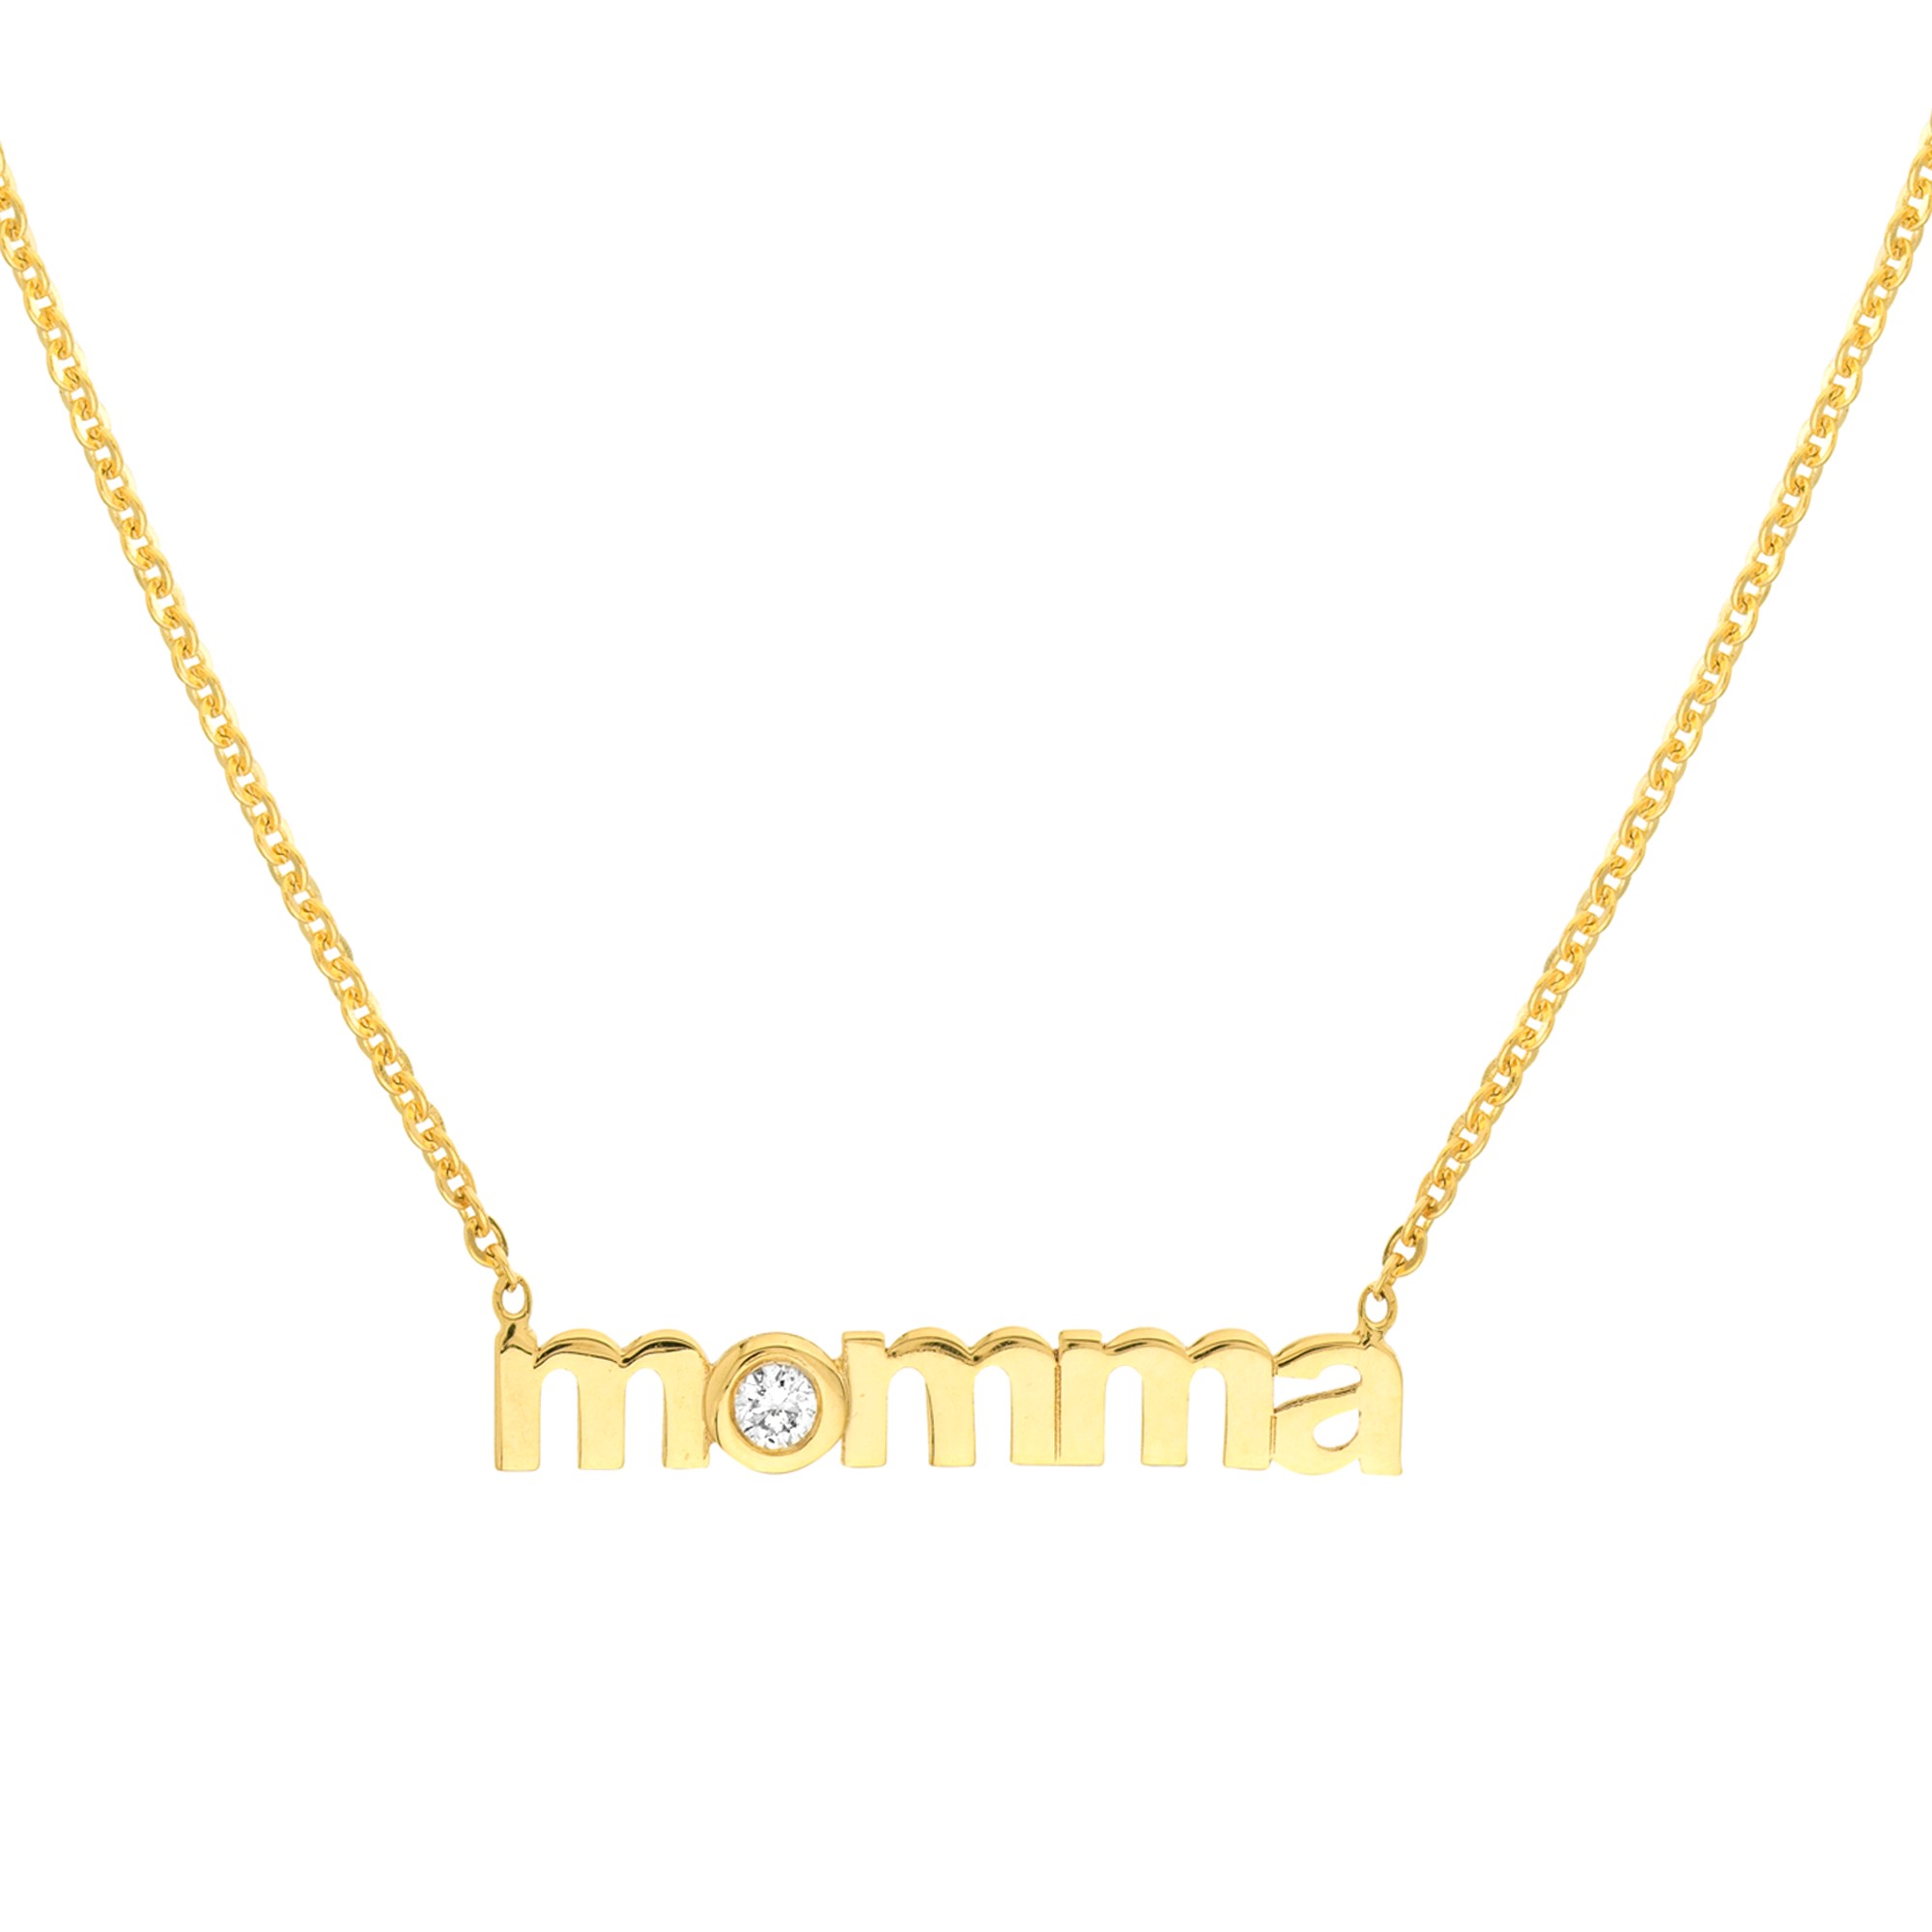 14 karat yellow gold "momma" necklace with one .03 carat round brilliant Diamond